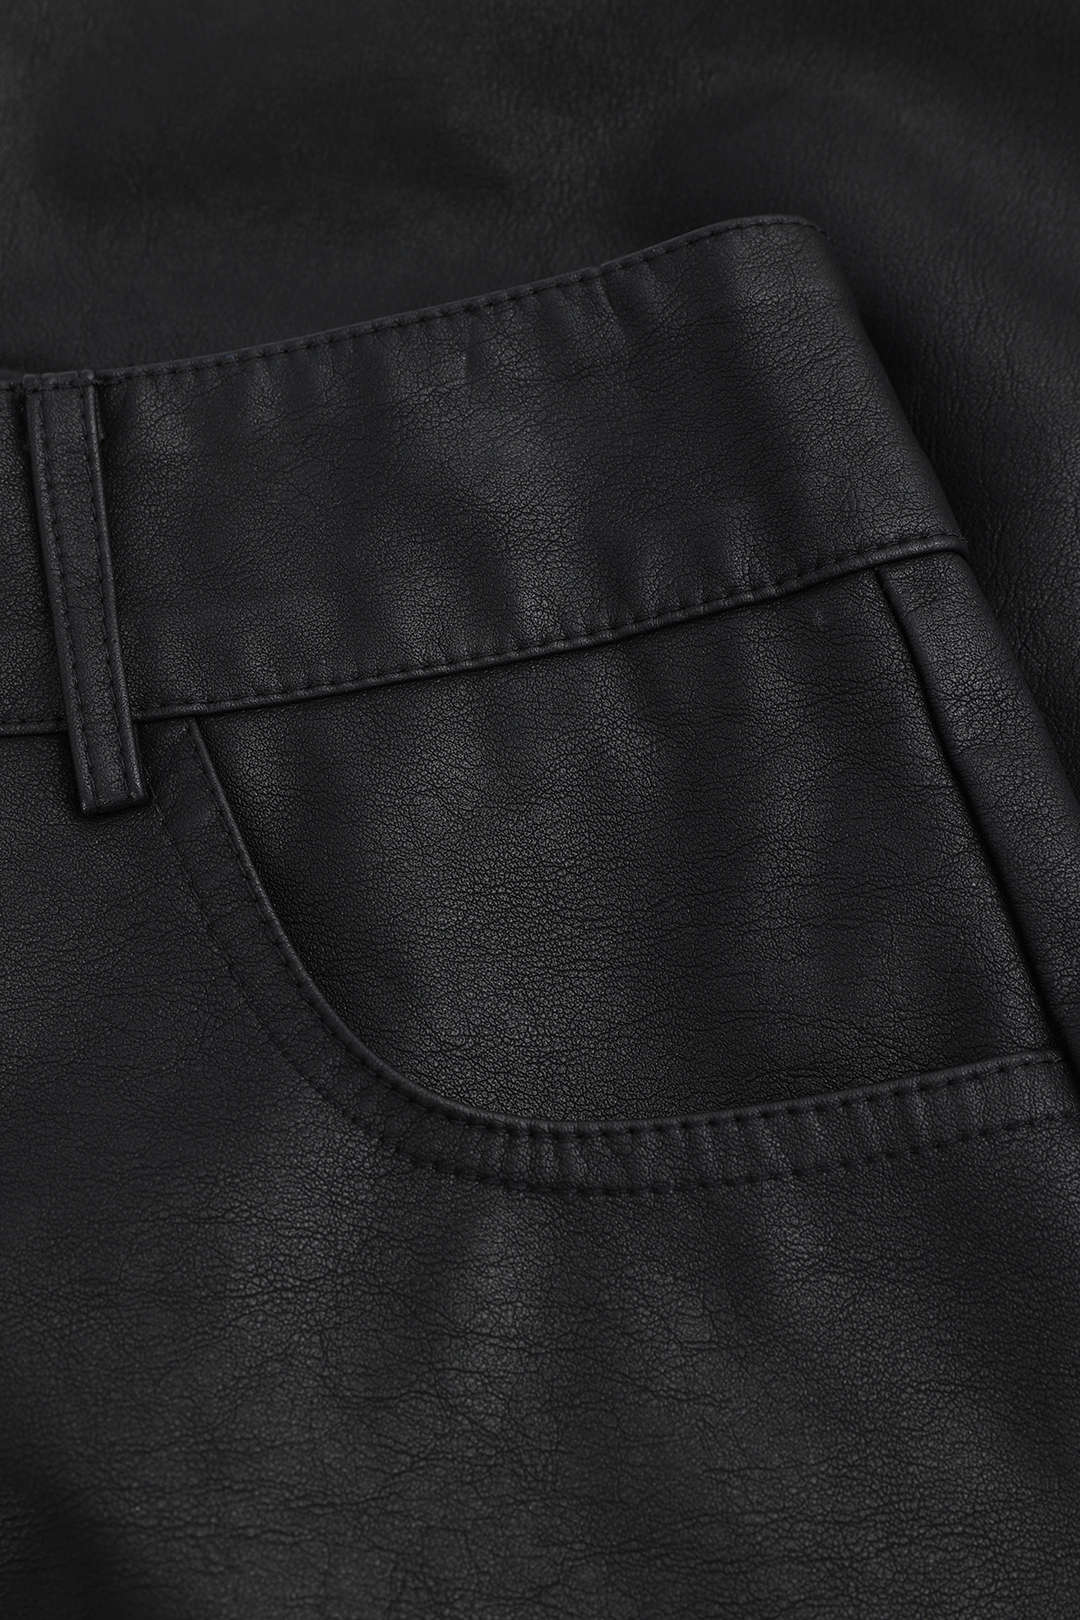 Faux Leather Slit Mini Skirt